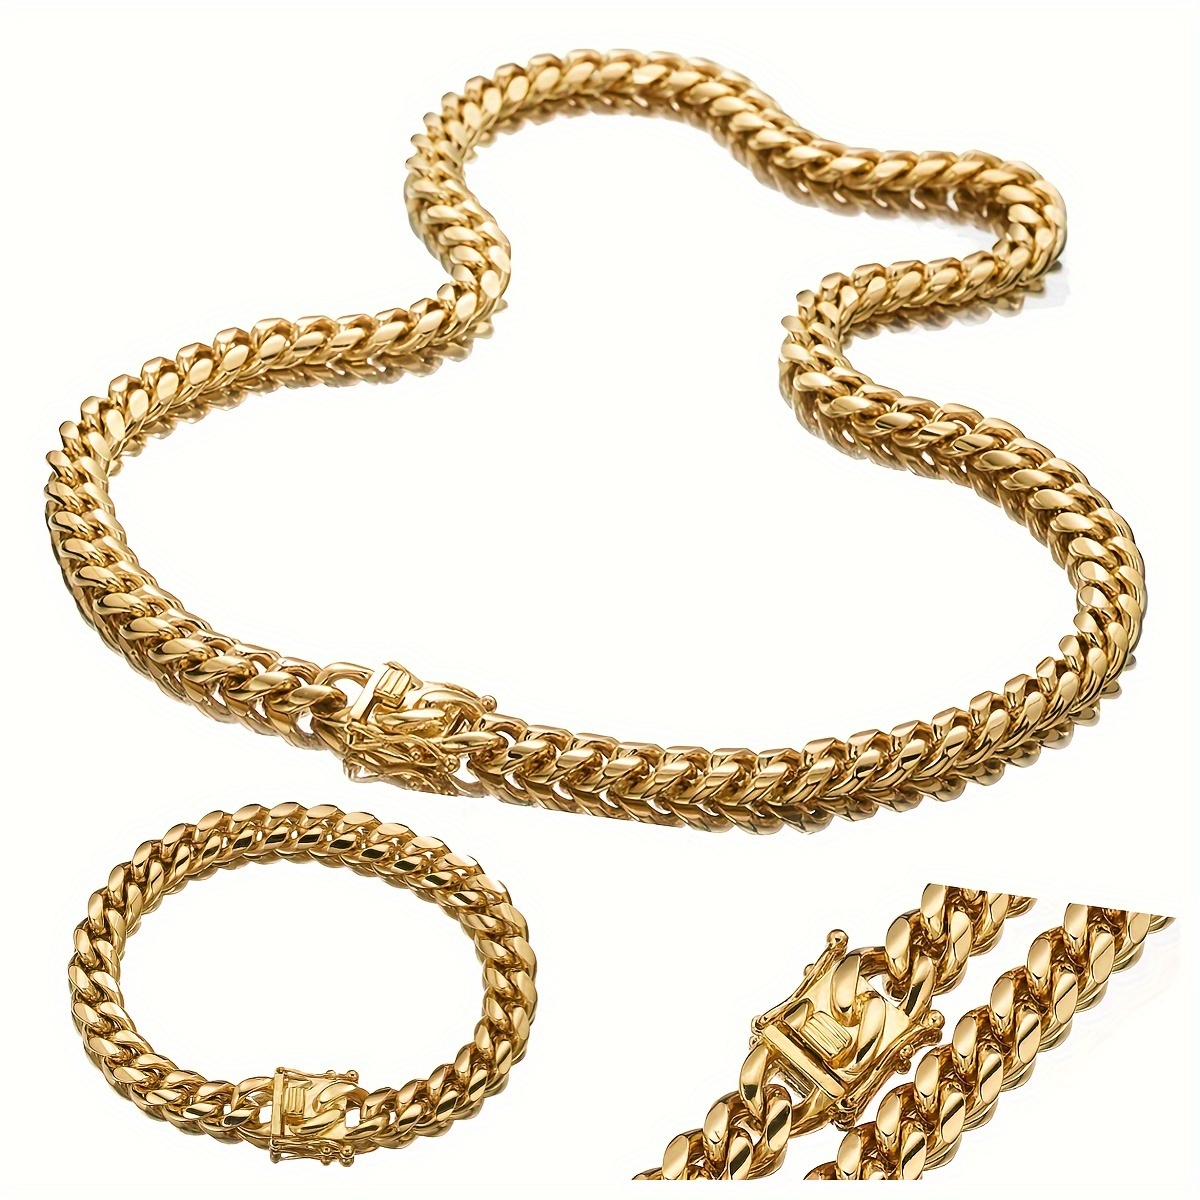 

2pcs Mens Golden Stainless Steel Cuban Chain Fashion Bracelet Necklace Jewelry Set